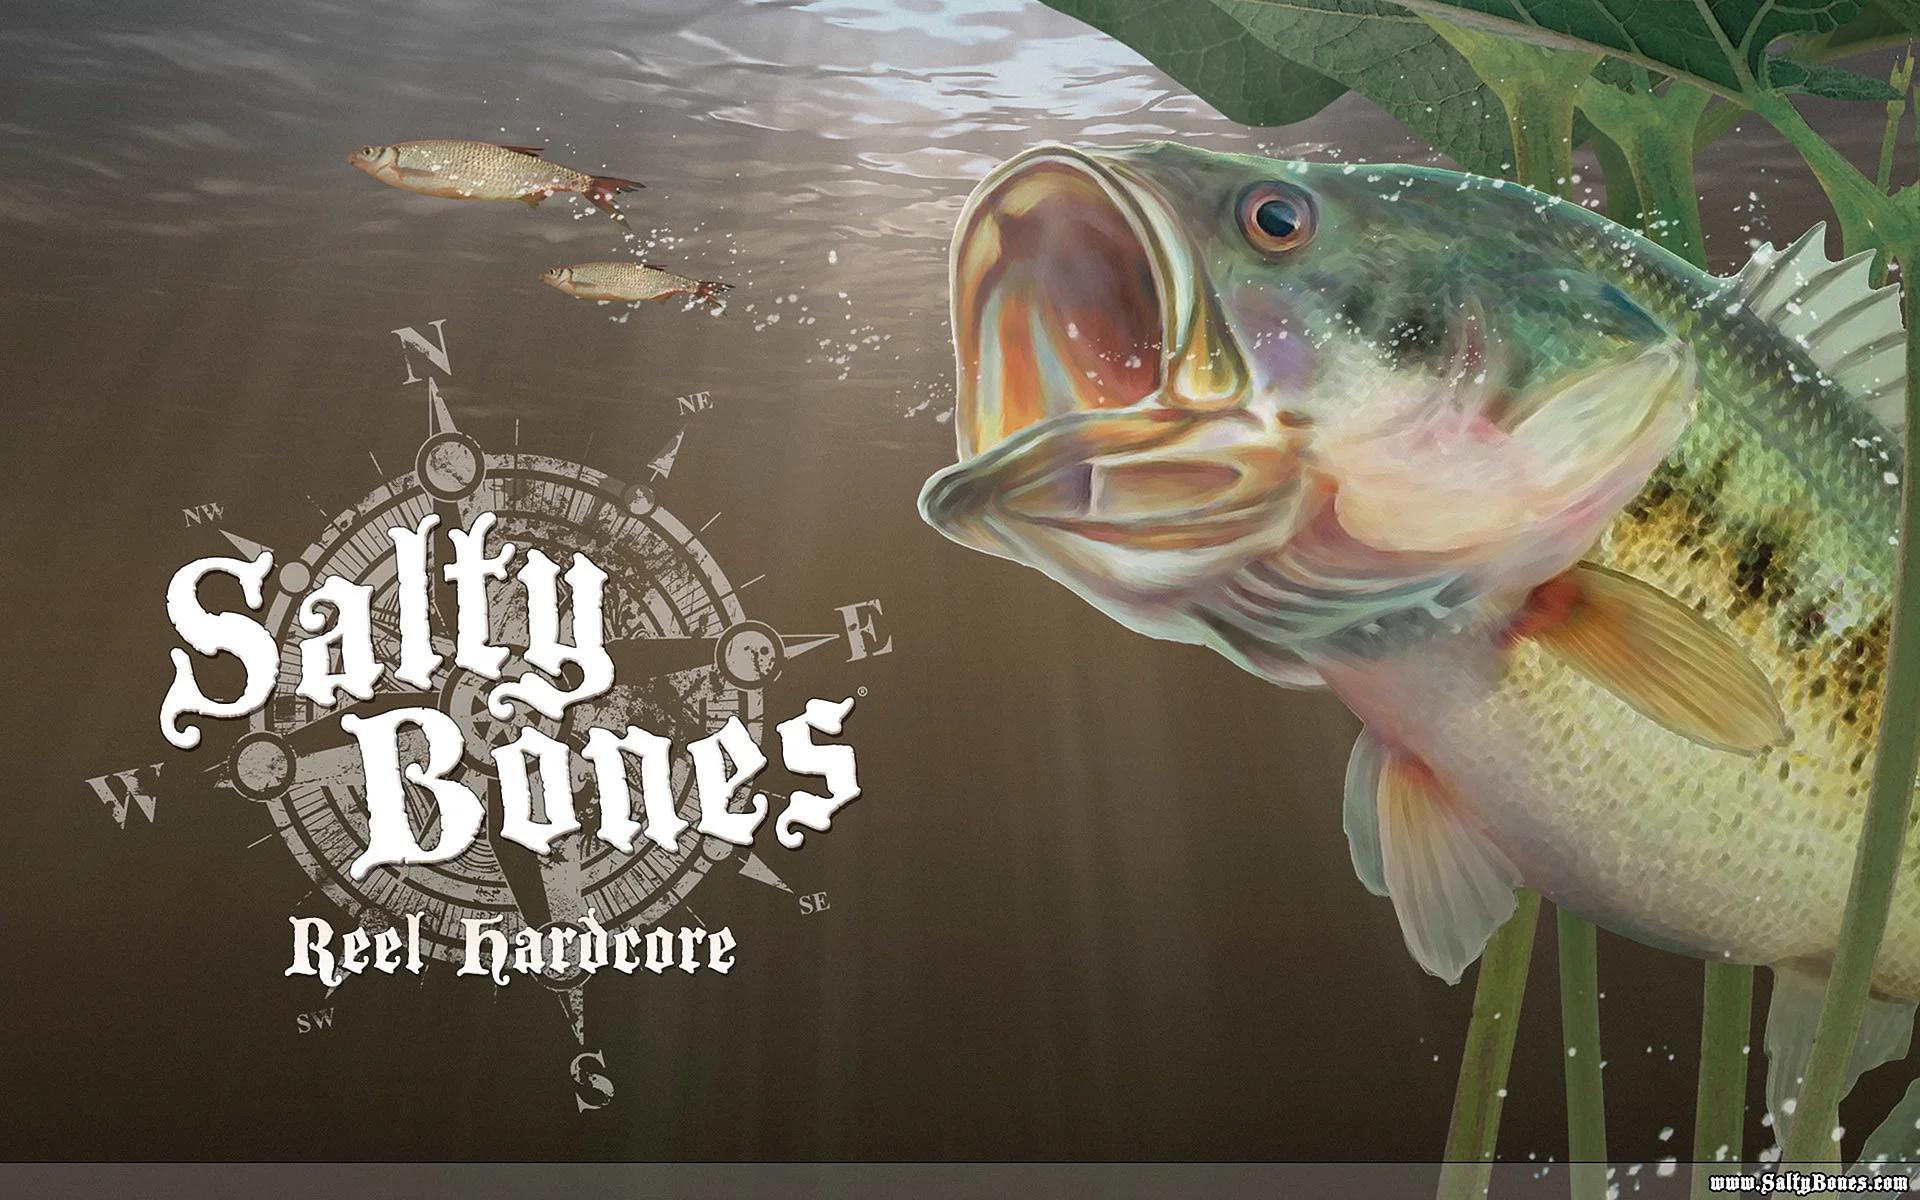 Bass Fishing Background Wallpaper